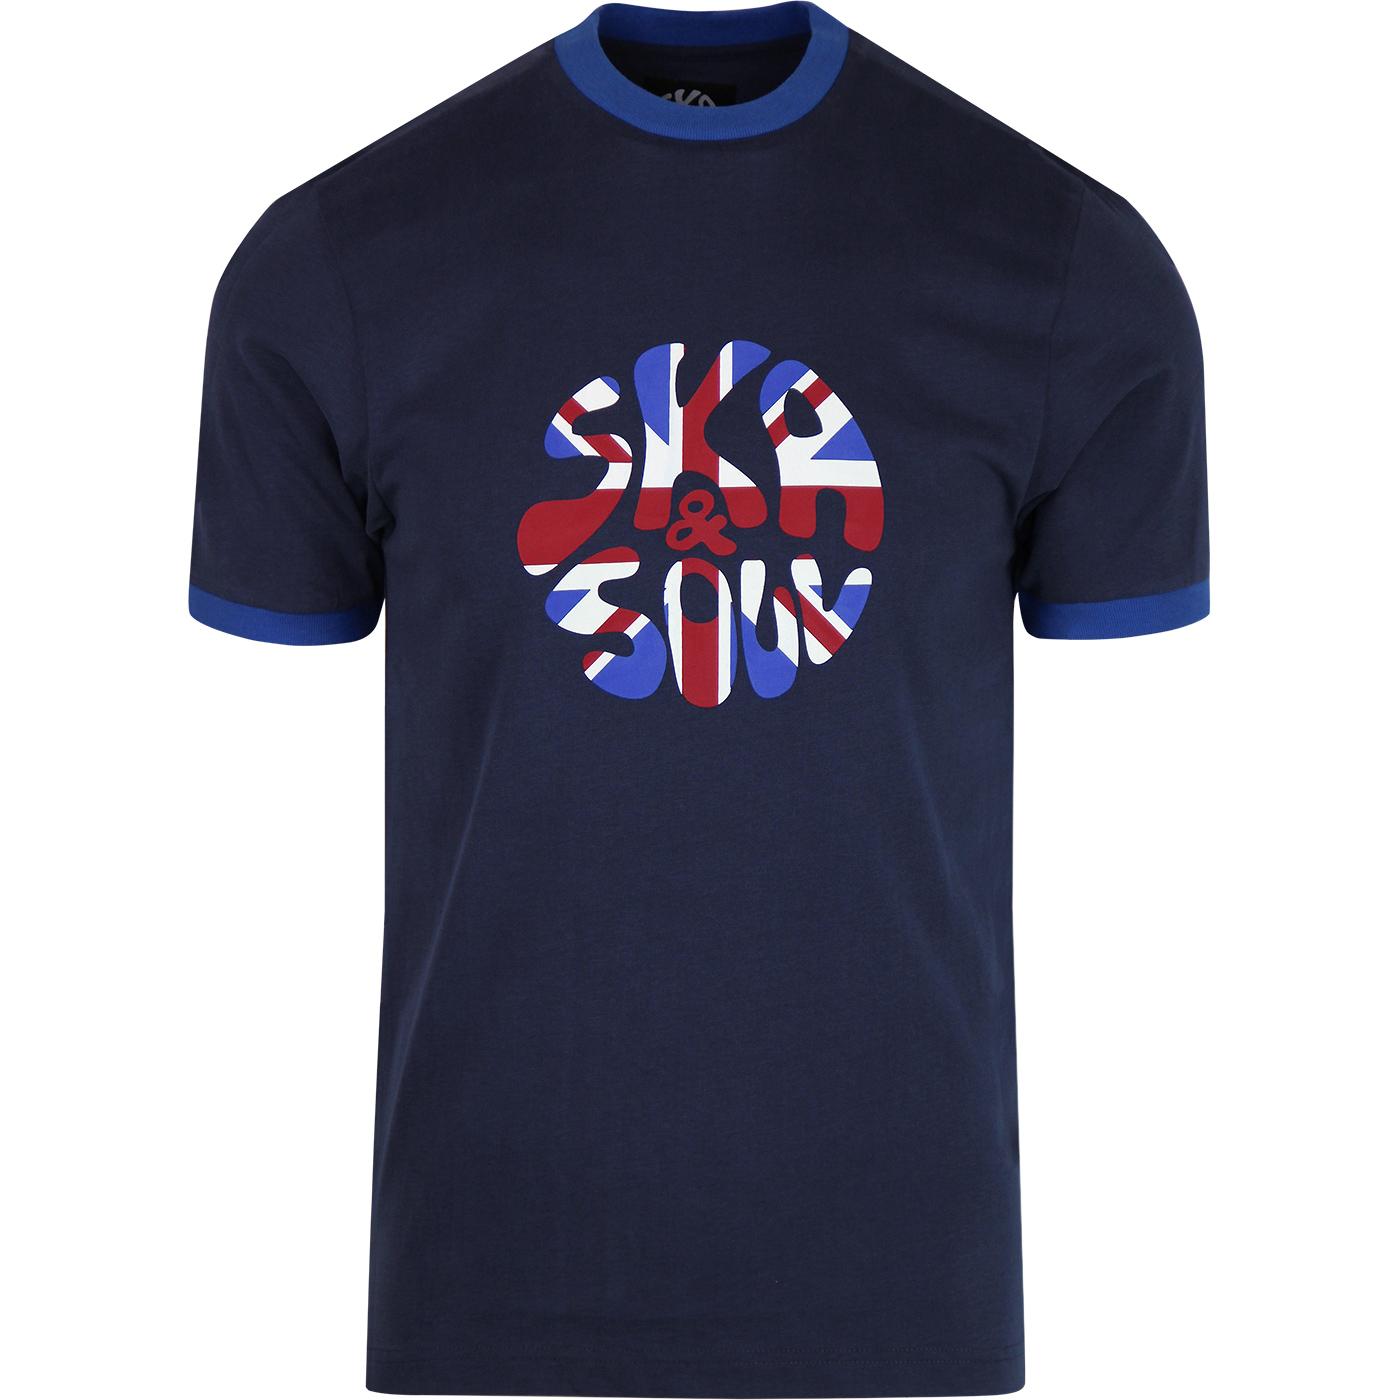 SKA & SOUL Retro Mod Union Jack Logo Ringer T-shirt Navy